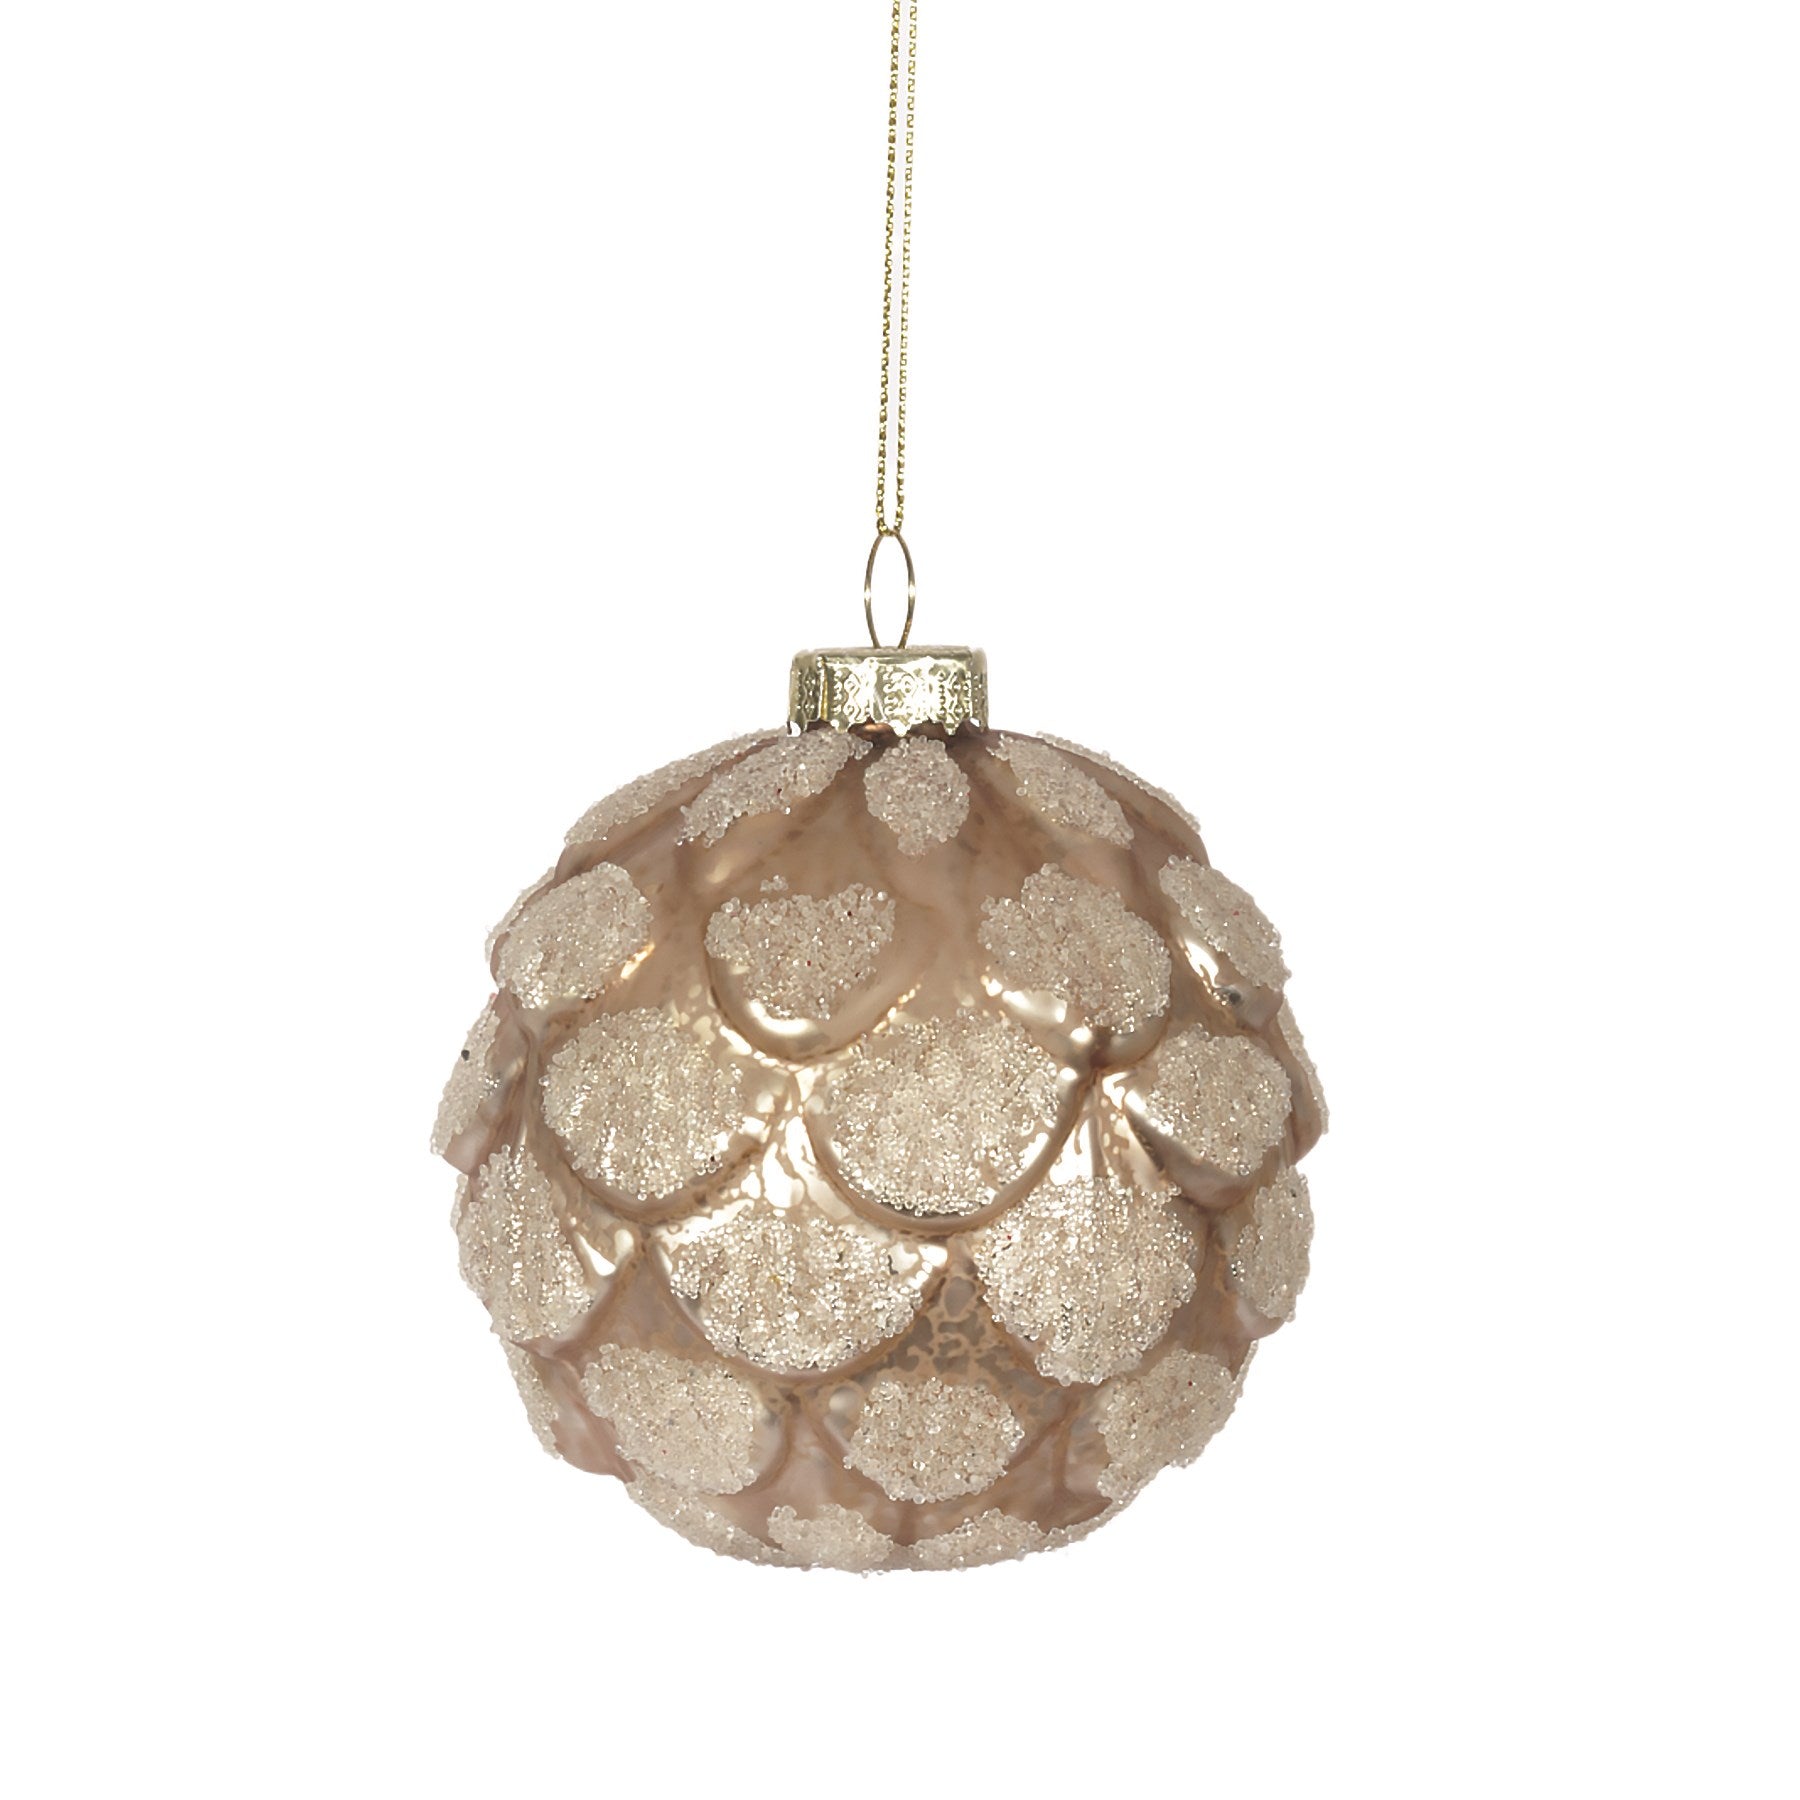 Natural Pine Cone Ball Glass Ornament